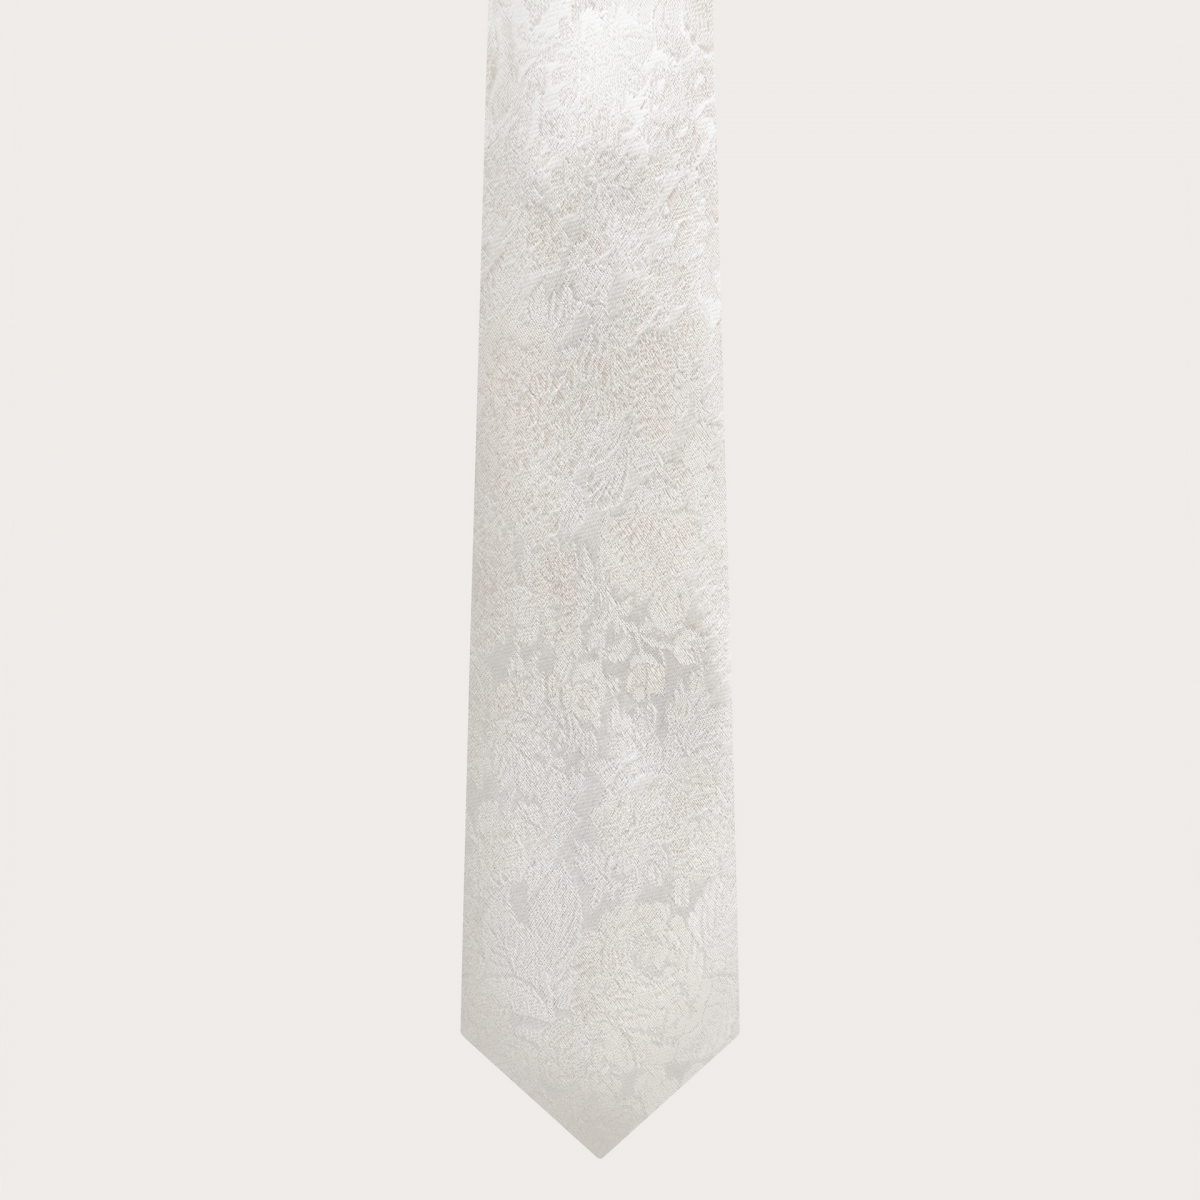 BRUCLE Corbata de boda en jacquard de seda blanca refinada